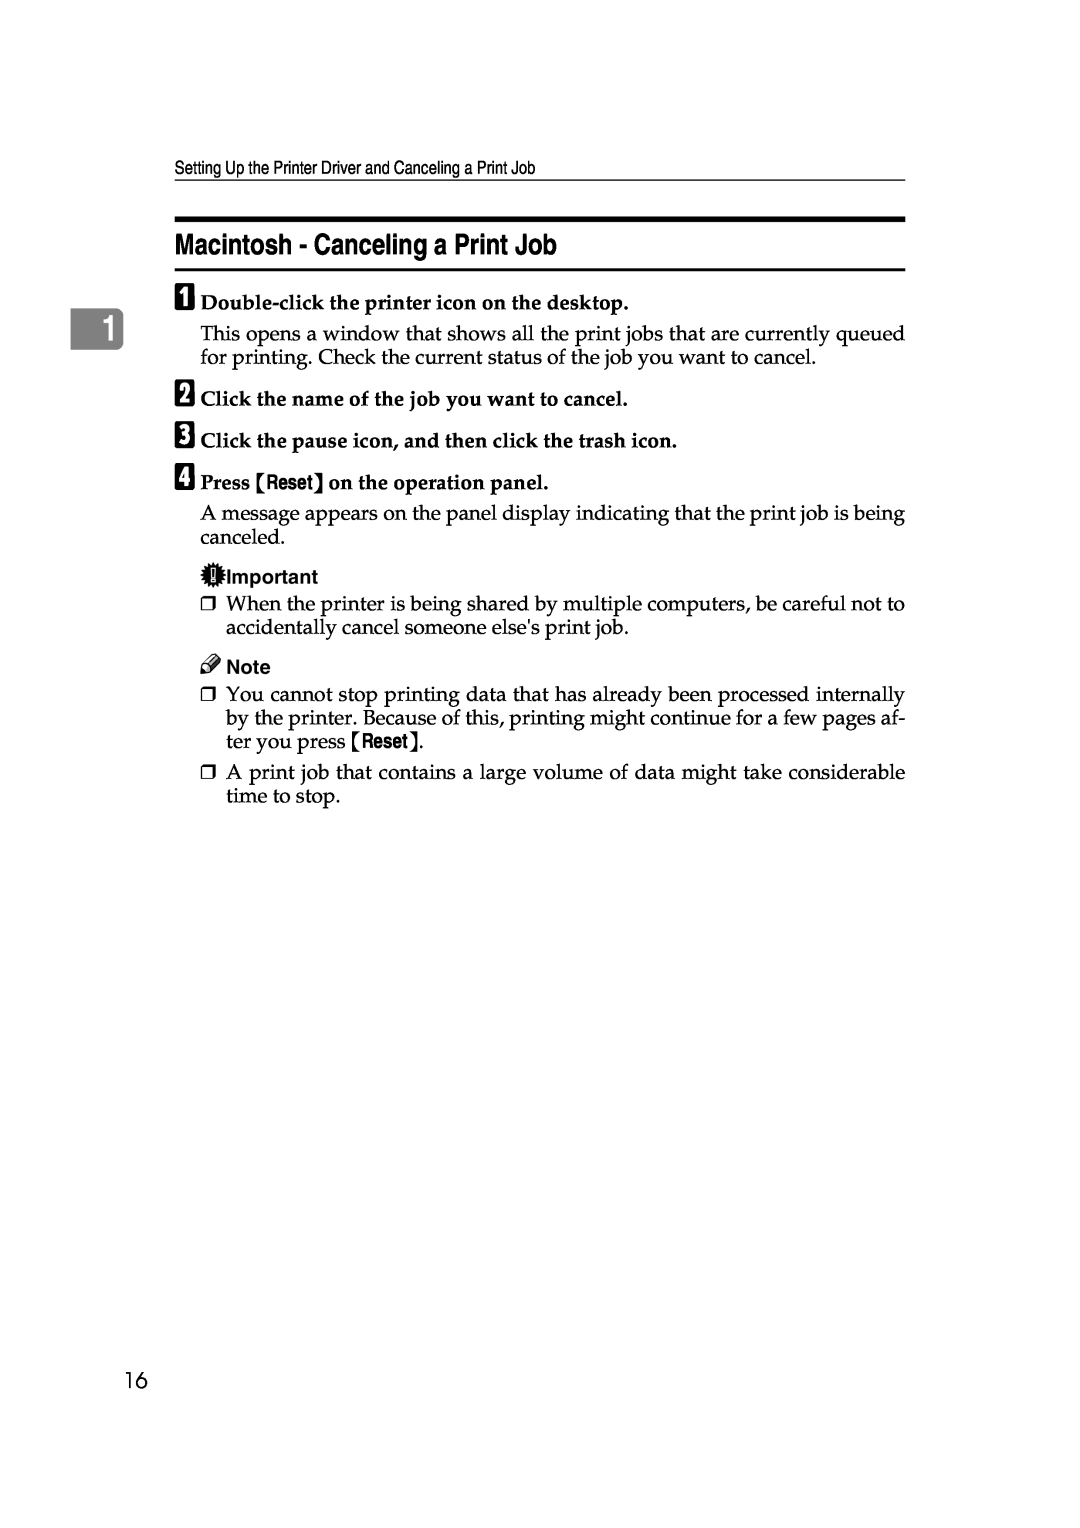 Lanier AP206 manual Macintosh - Canceling a Print Job, A Double-click the printer icon on the desktop 